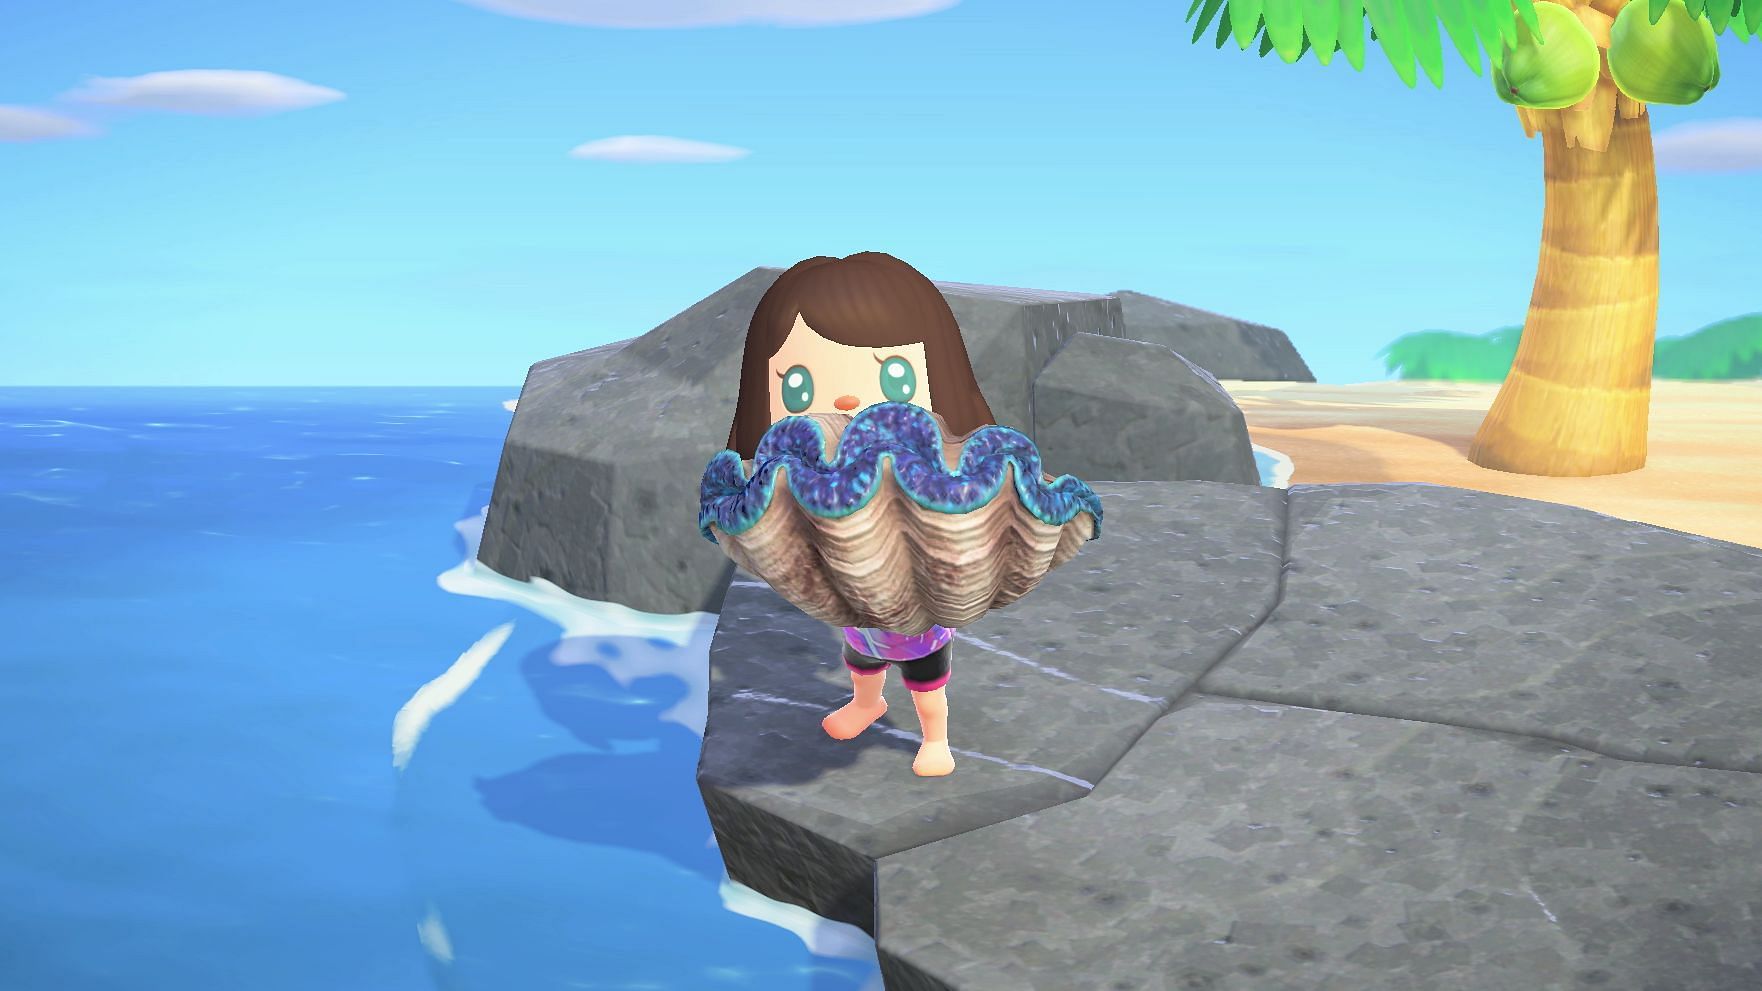 Gigas giant clam in Animal Crossing (Image via Nintendo)